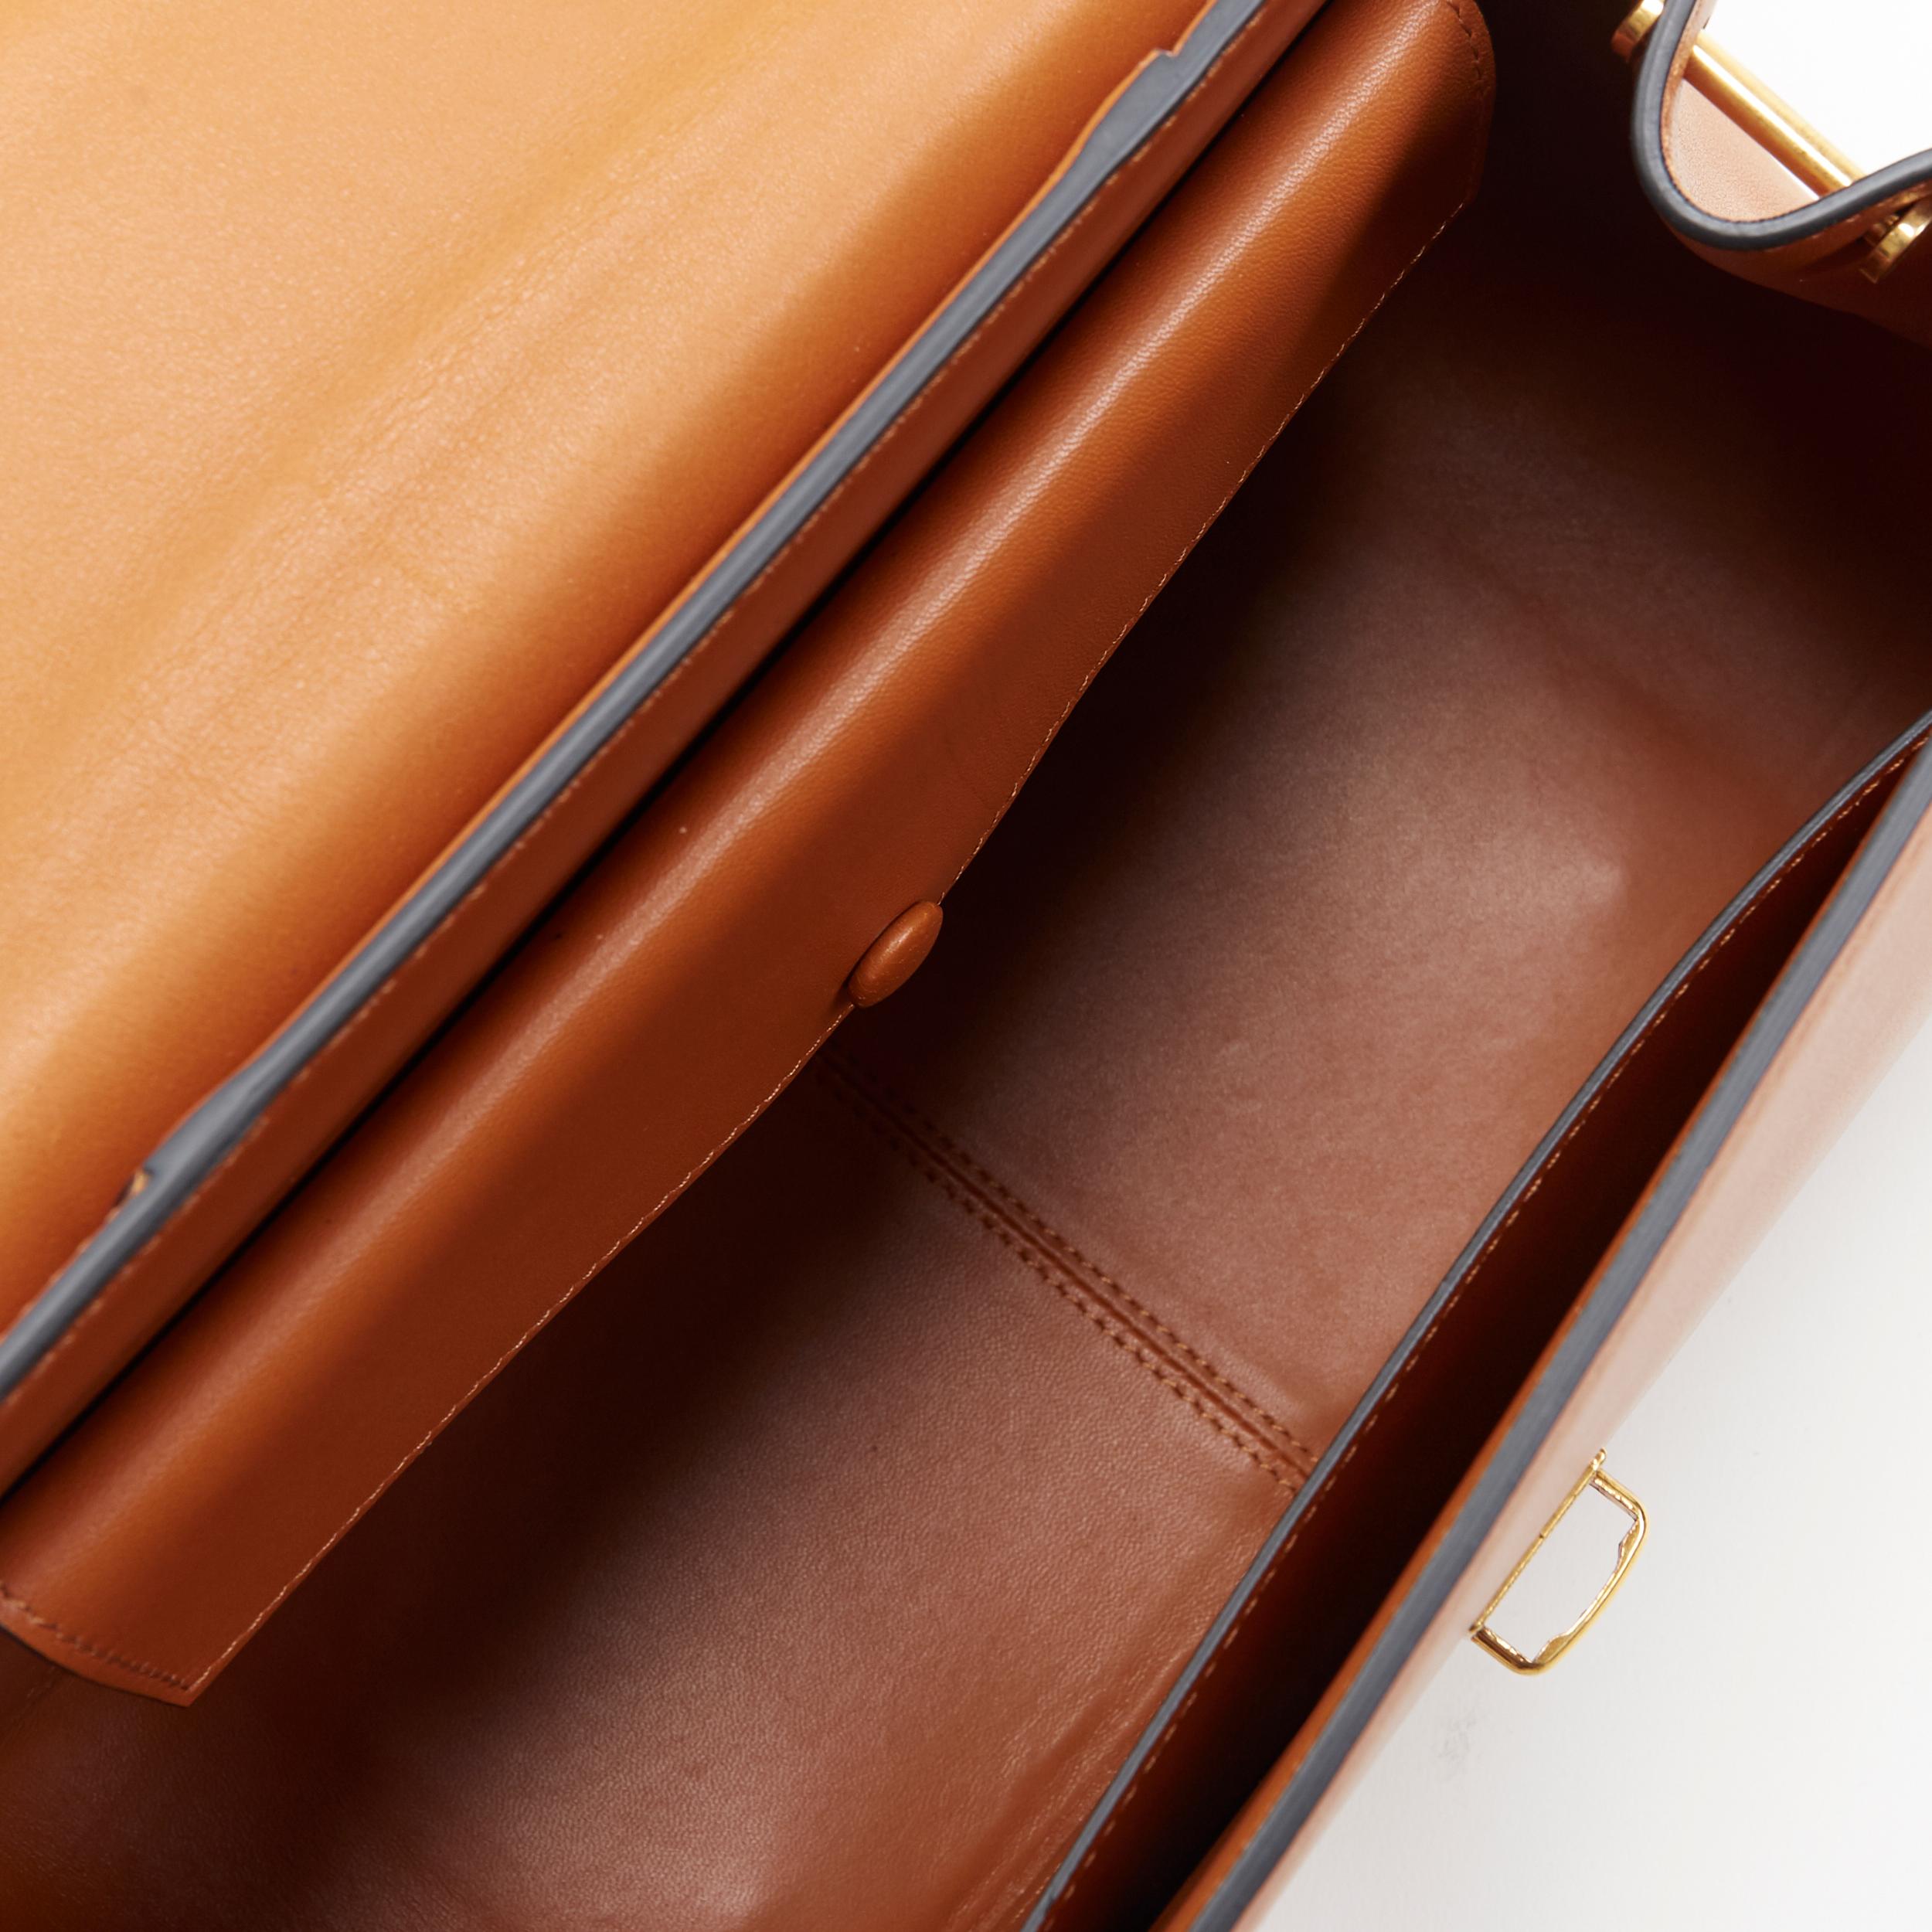 VERSACE Virtus cognac brown leather gold buckle flap top handle satchel bag 3